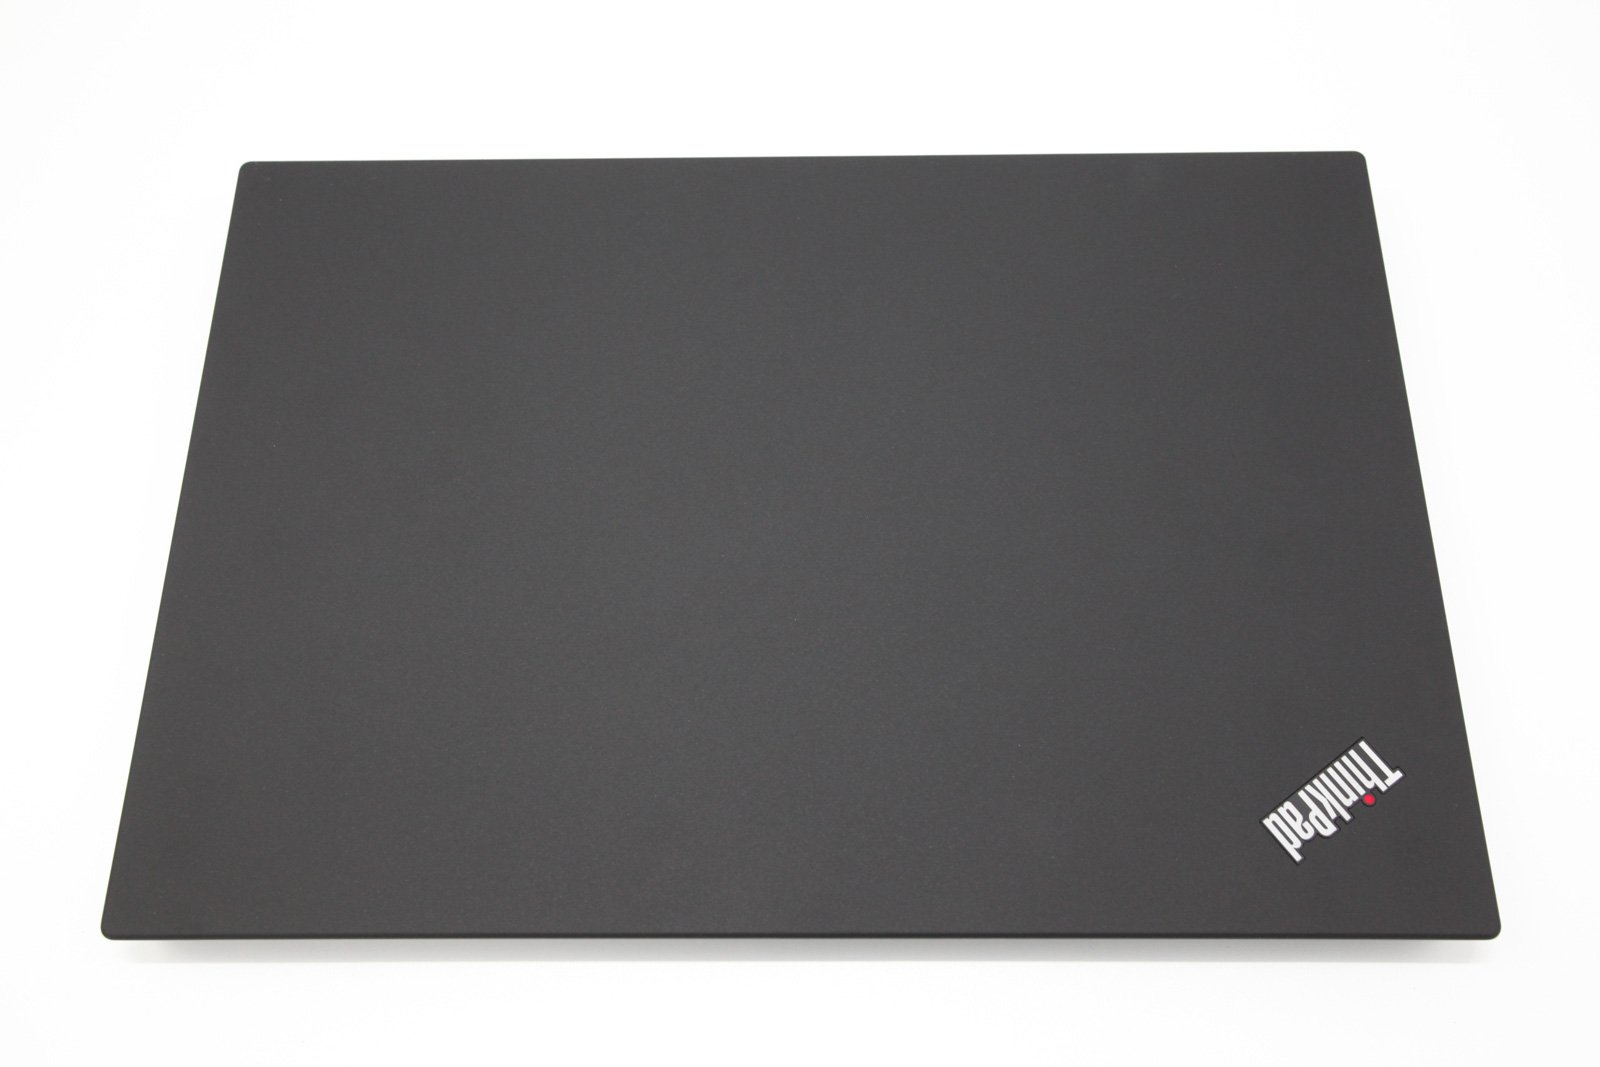 Lenovo ThinkPad T15 Touch Laptop i7-10610U 512GB 16GB RAM, NVIDIA MX330 Warranty - CruiseTech